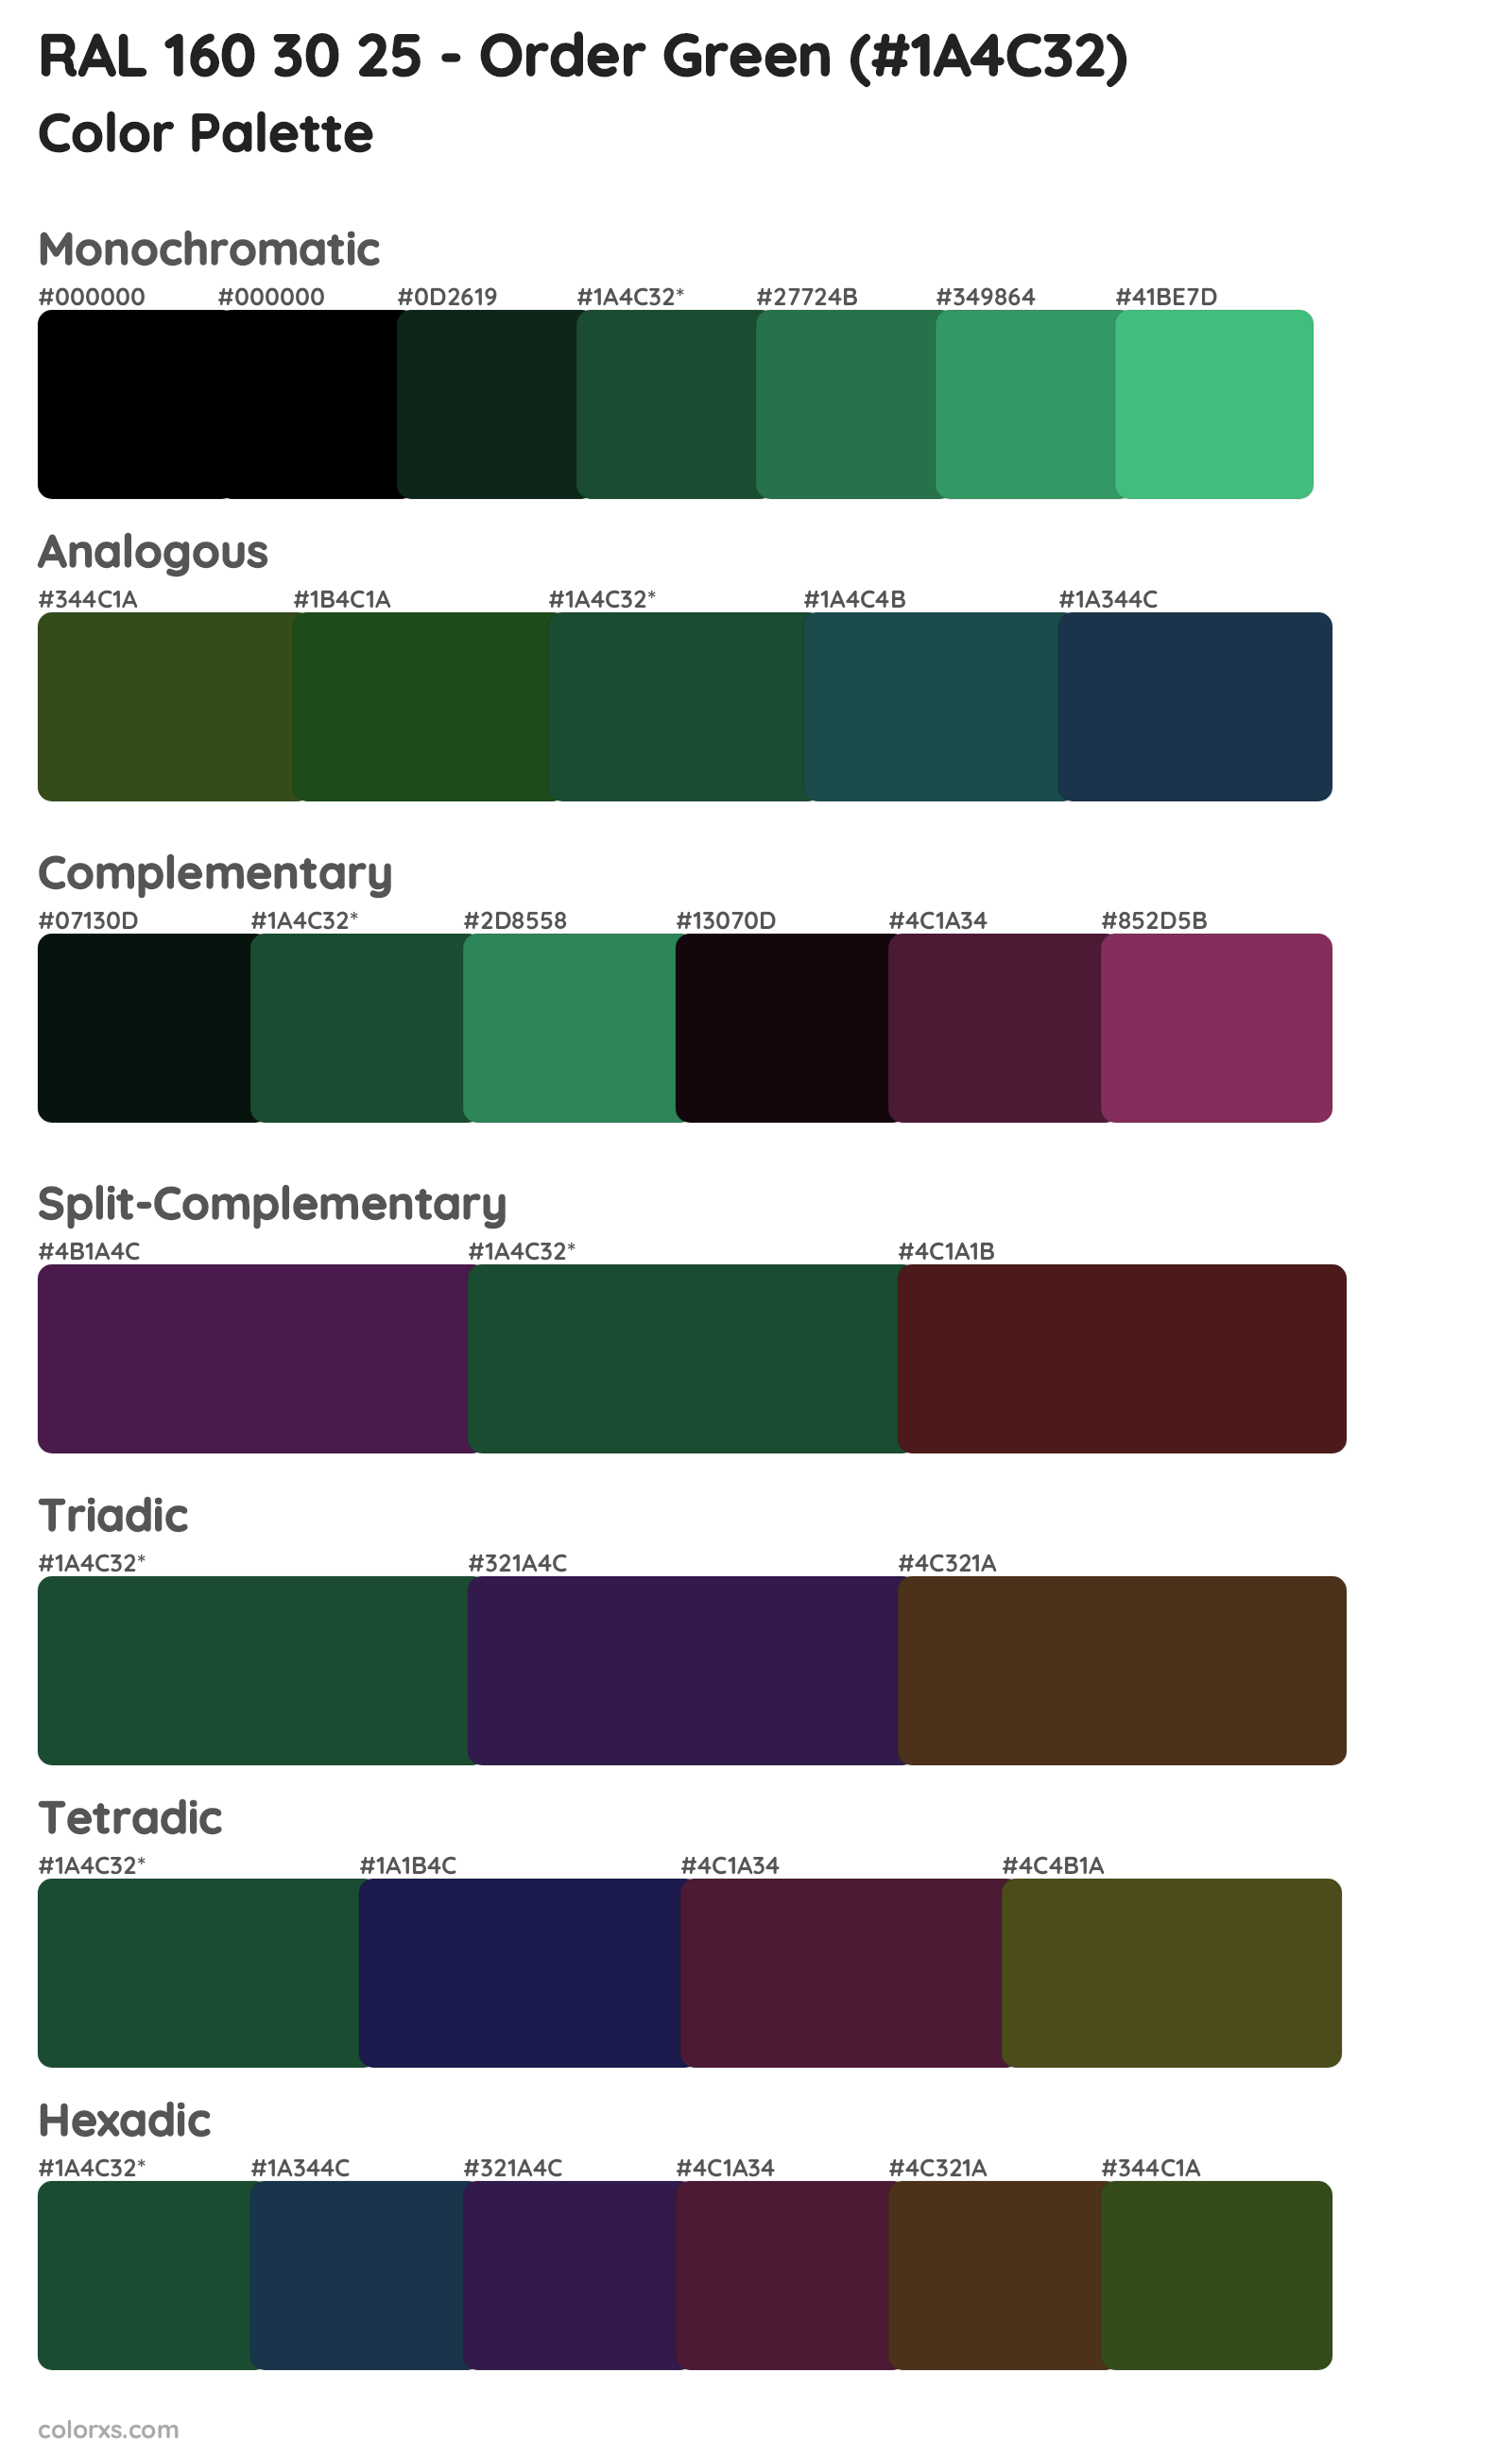 RAL 160 30 25 - Order Green Color Scheme Palettes